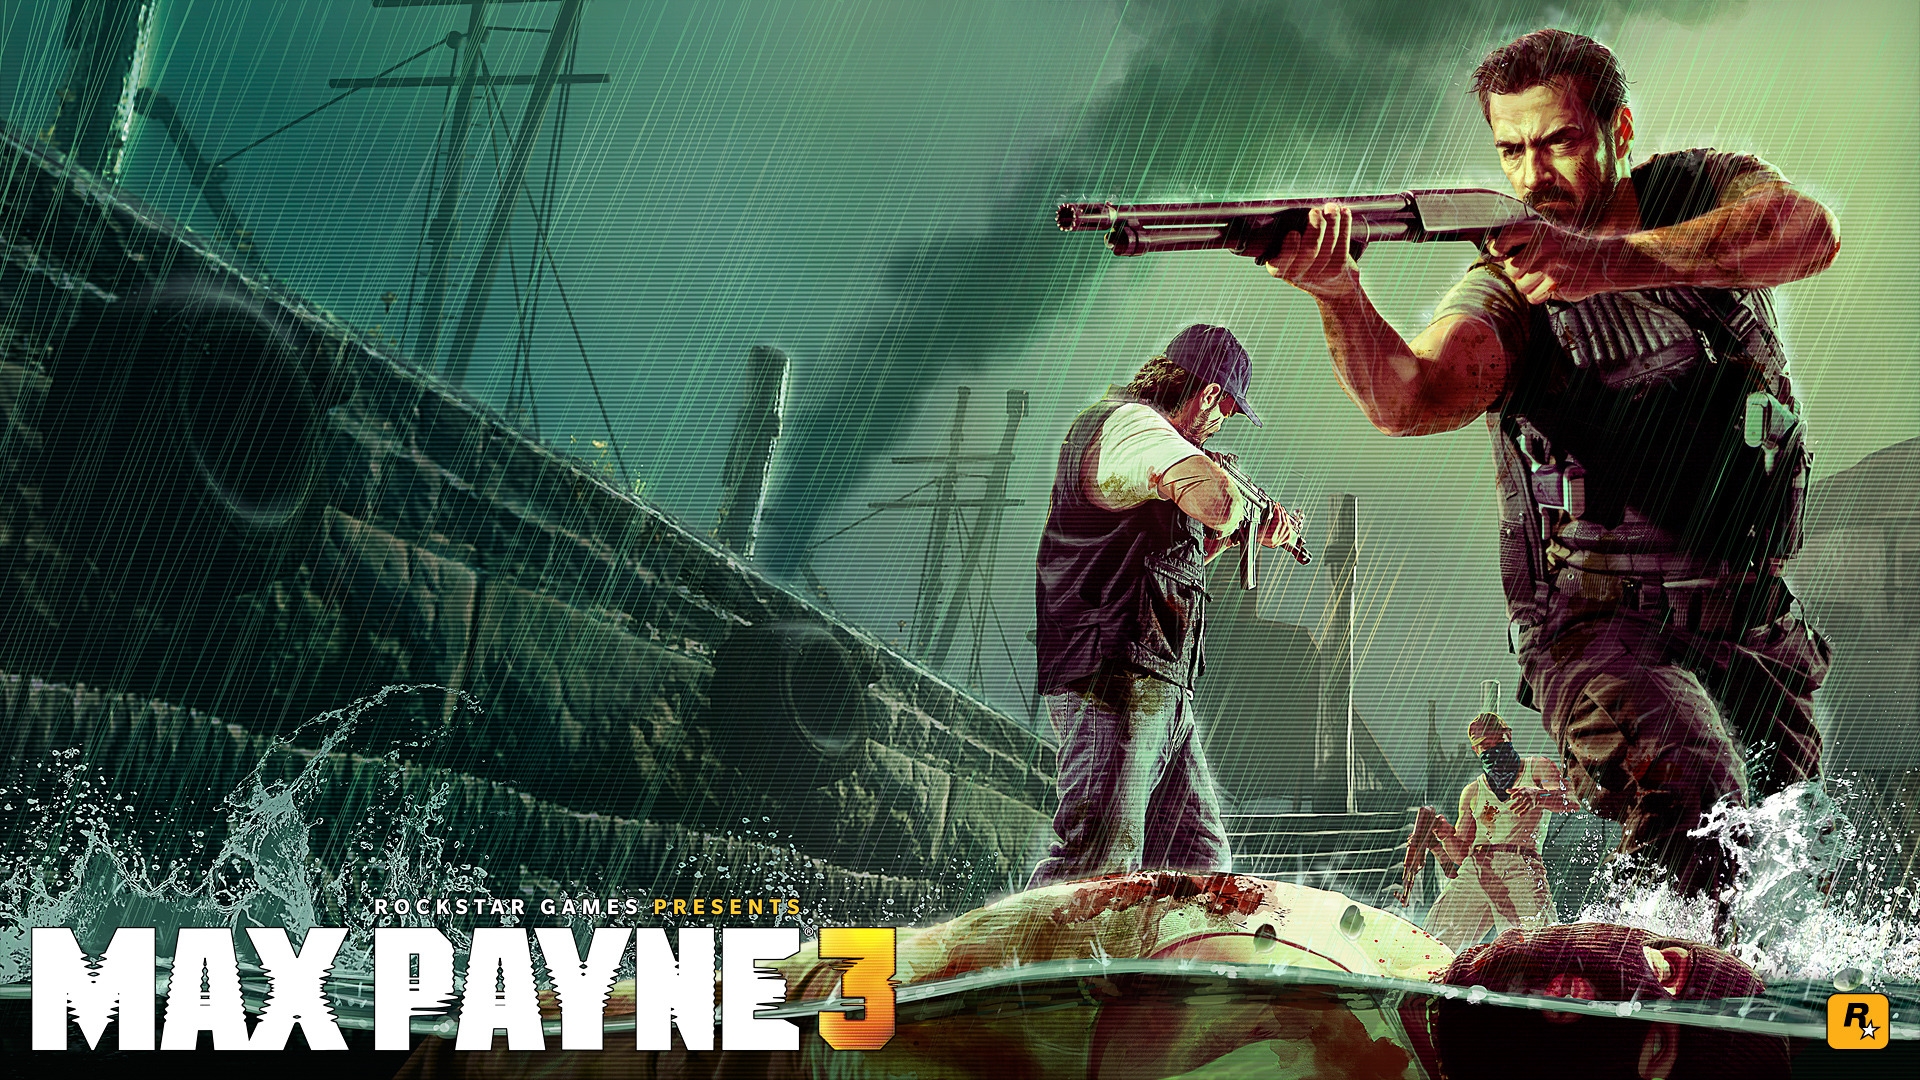 Rockstar Max Payne 3 for 1920 x 1080 HDTV 1080p resolution